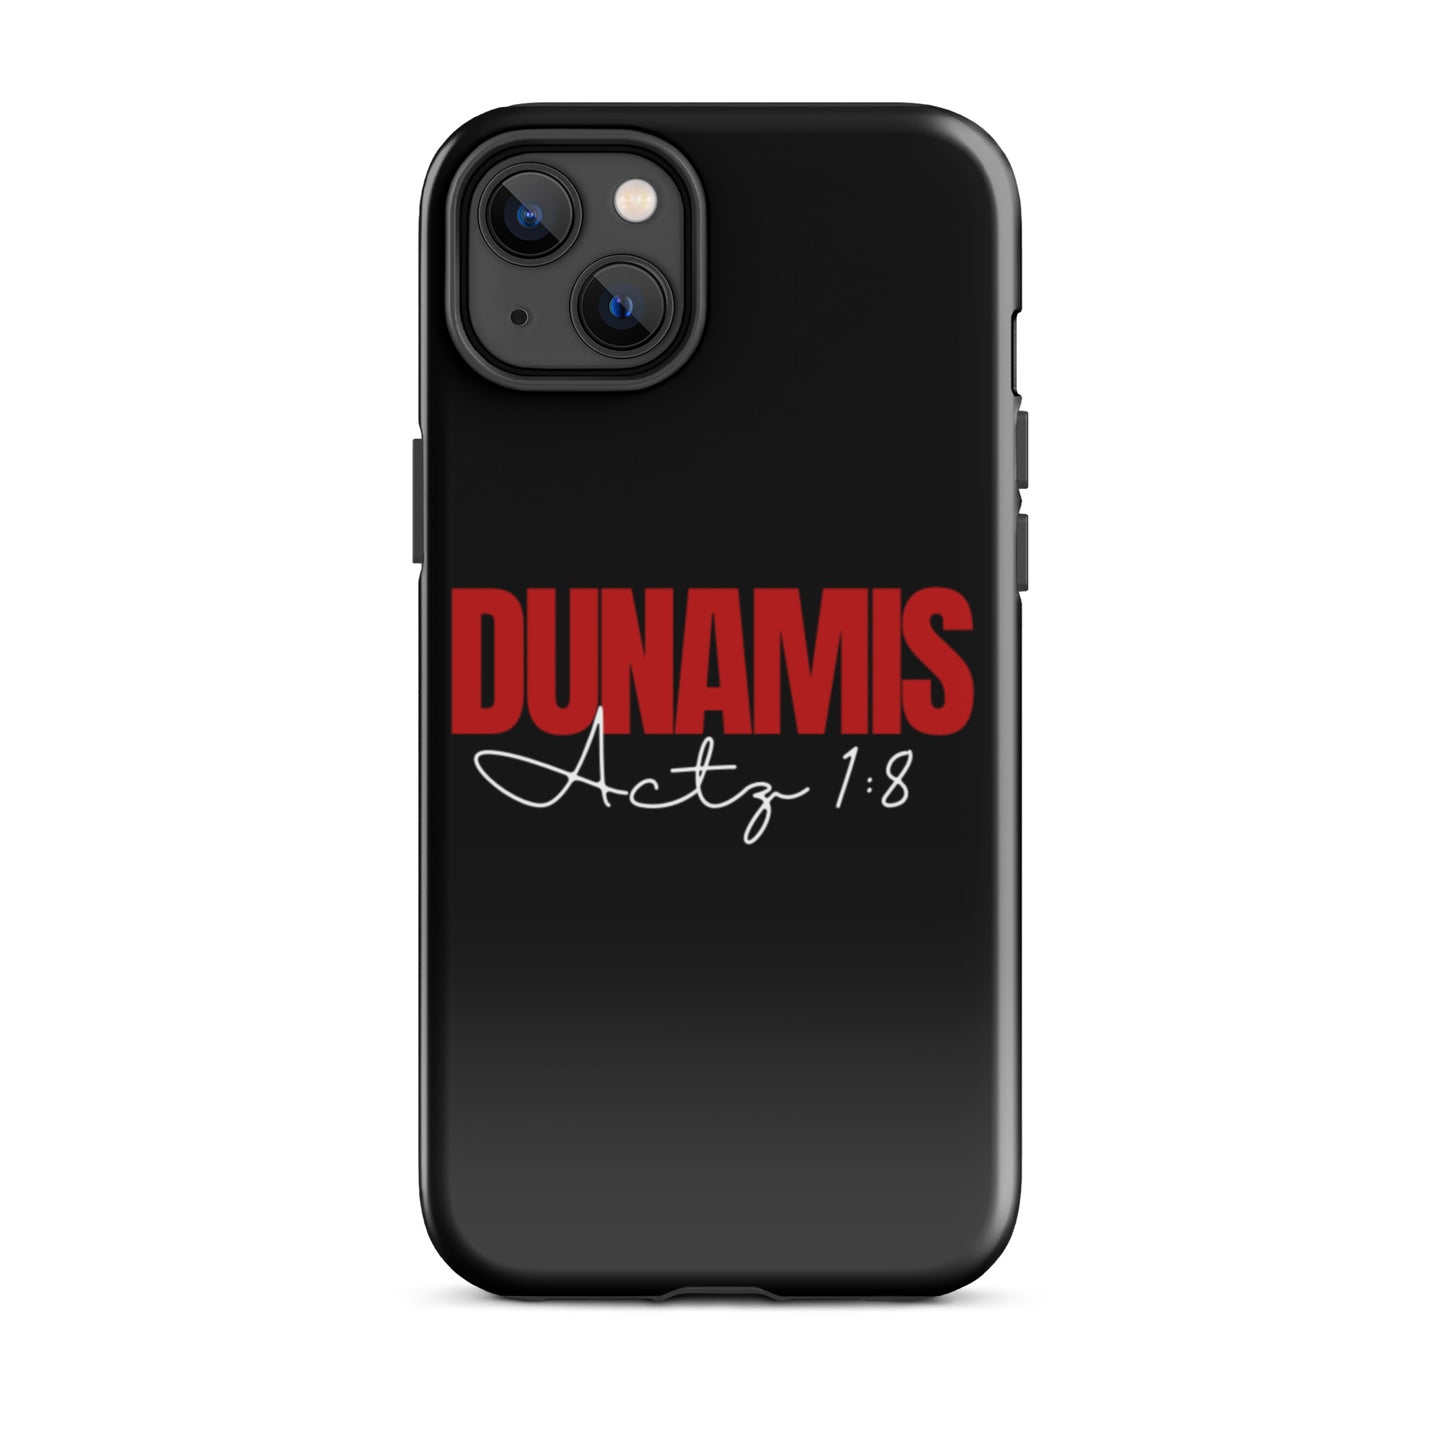 Dunamis Actz Tough Case for iPhone®